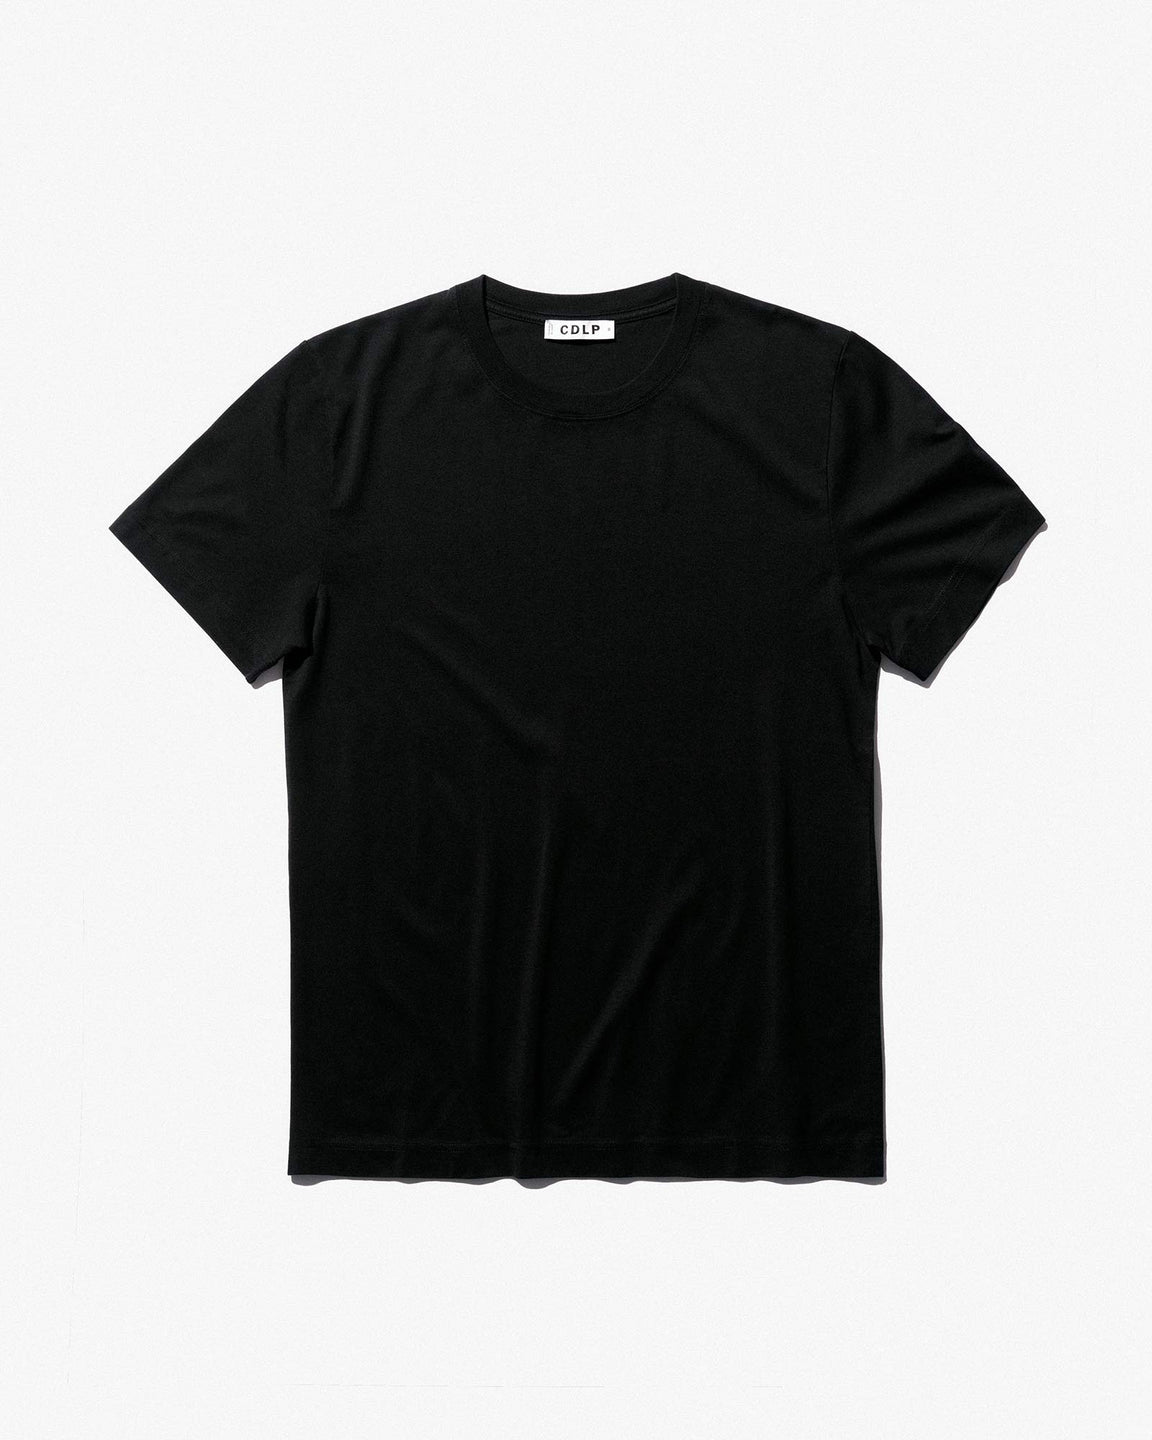 CDLP Midweight T-Shirt in Black